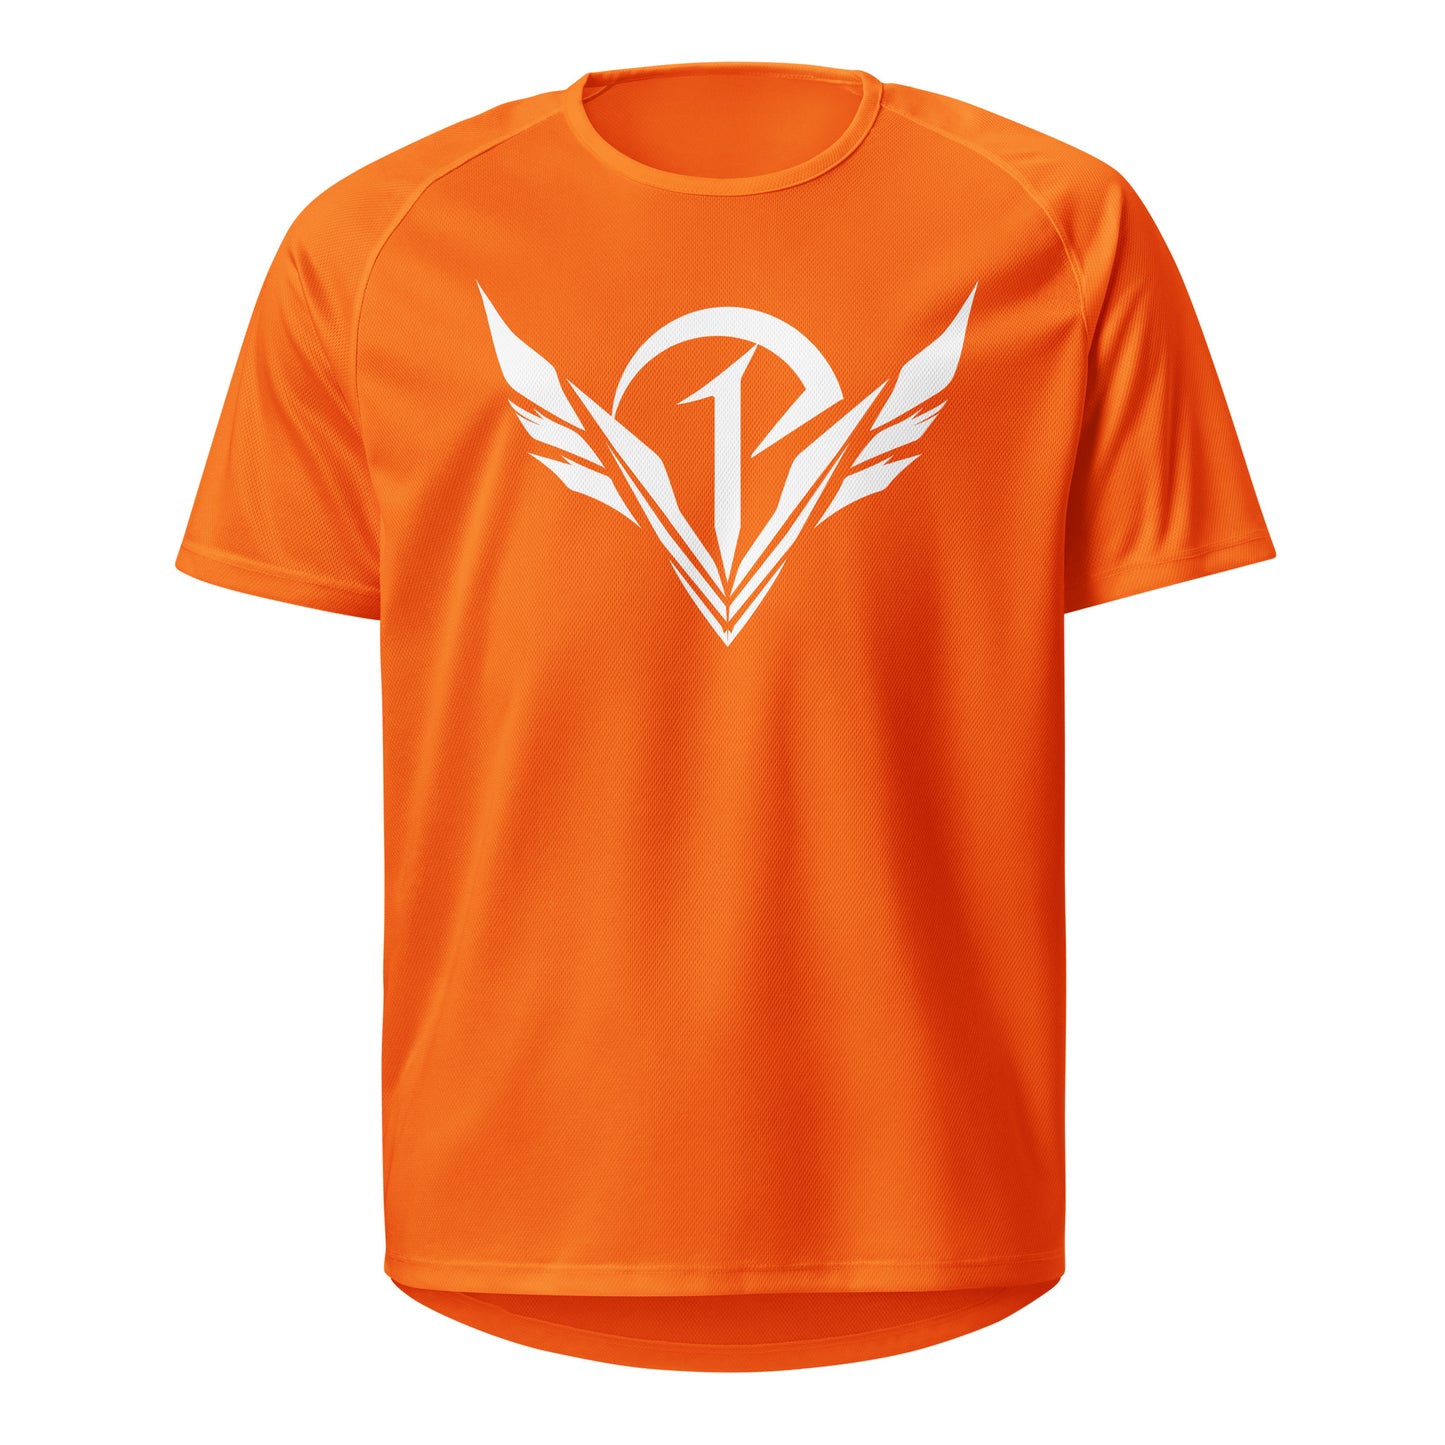 PBV-2024-0005 (Unisex sports jersey)